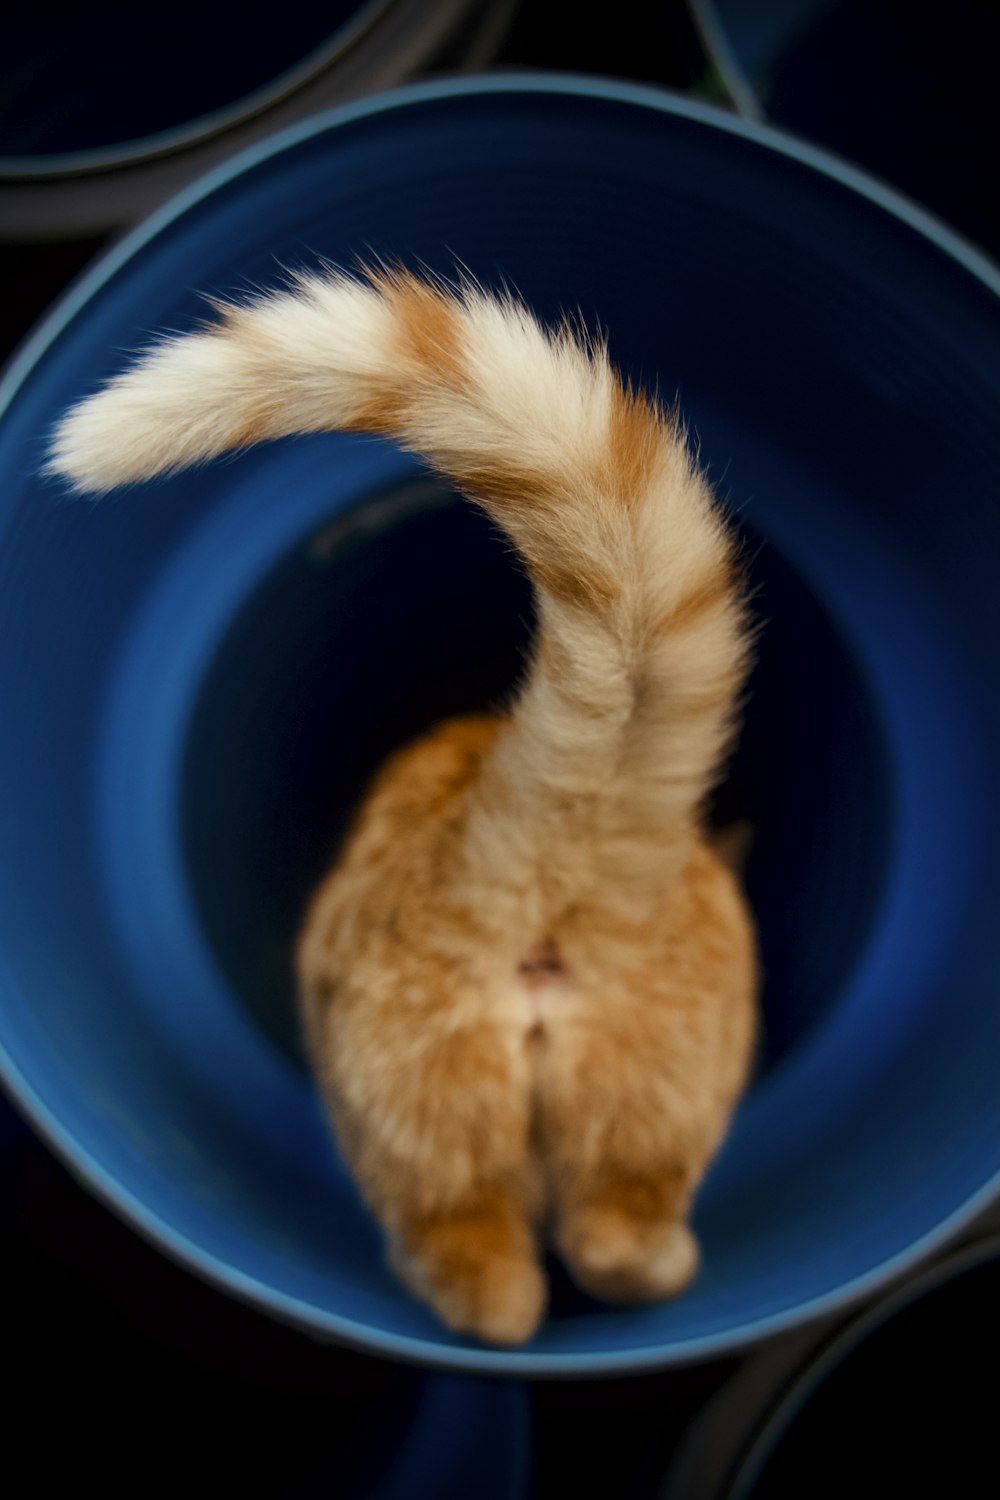 gato tabby laranja no balde plástico azul